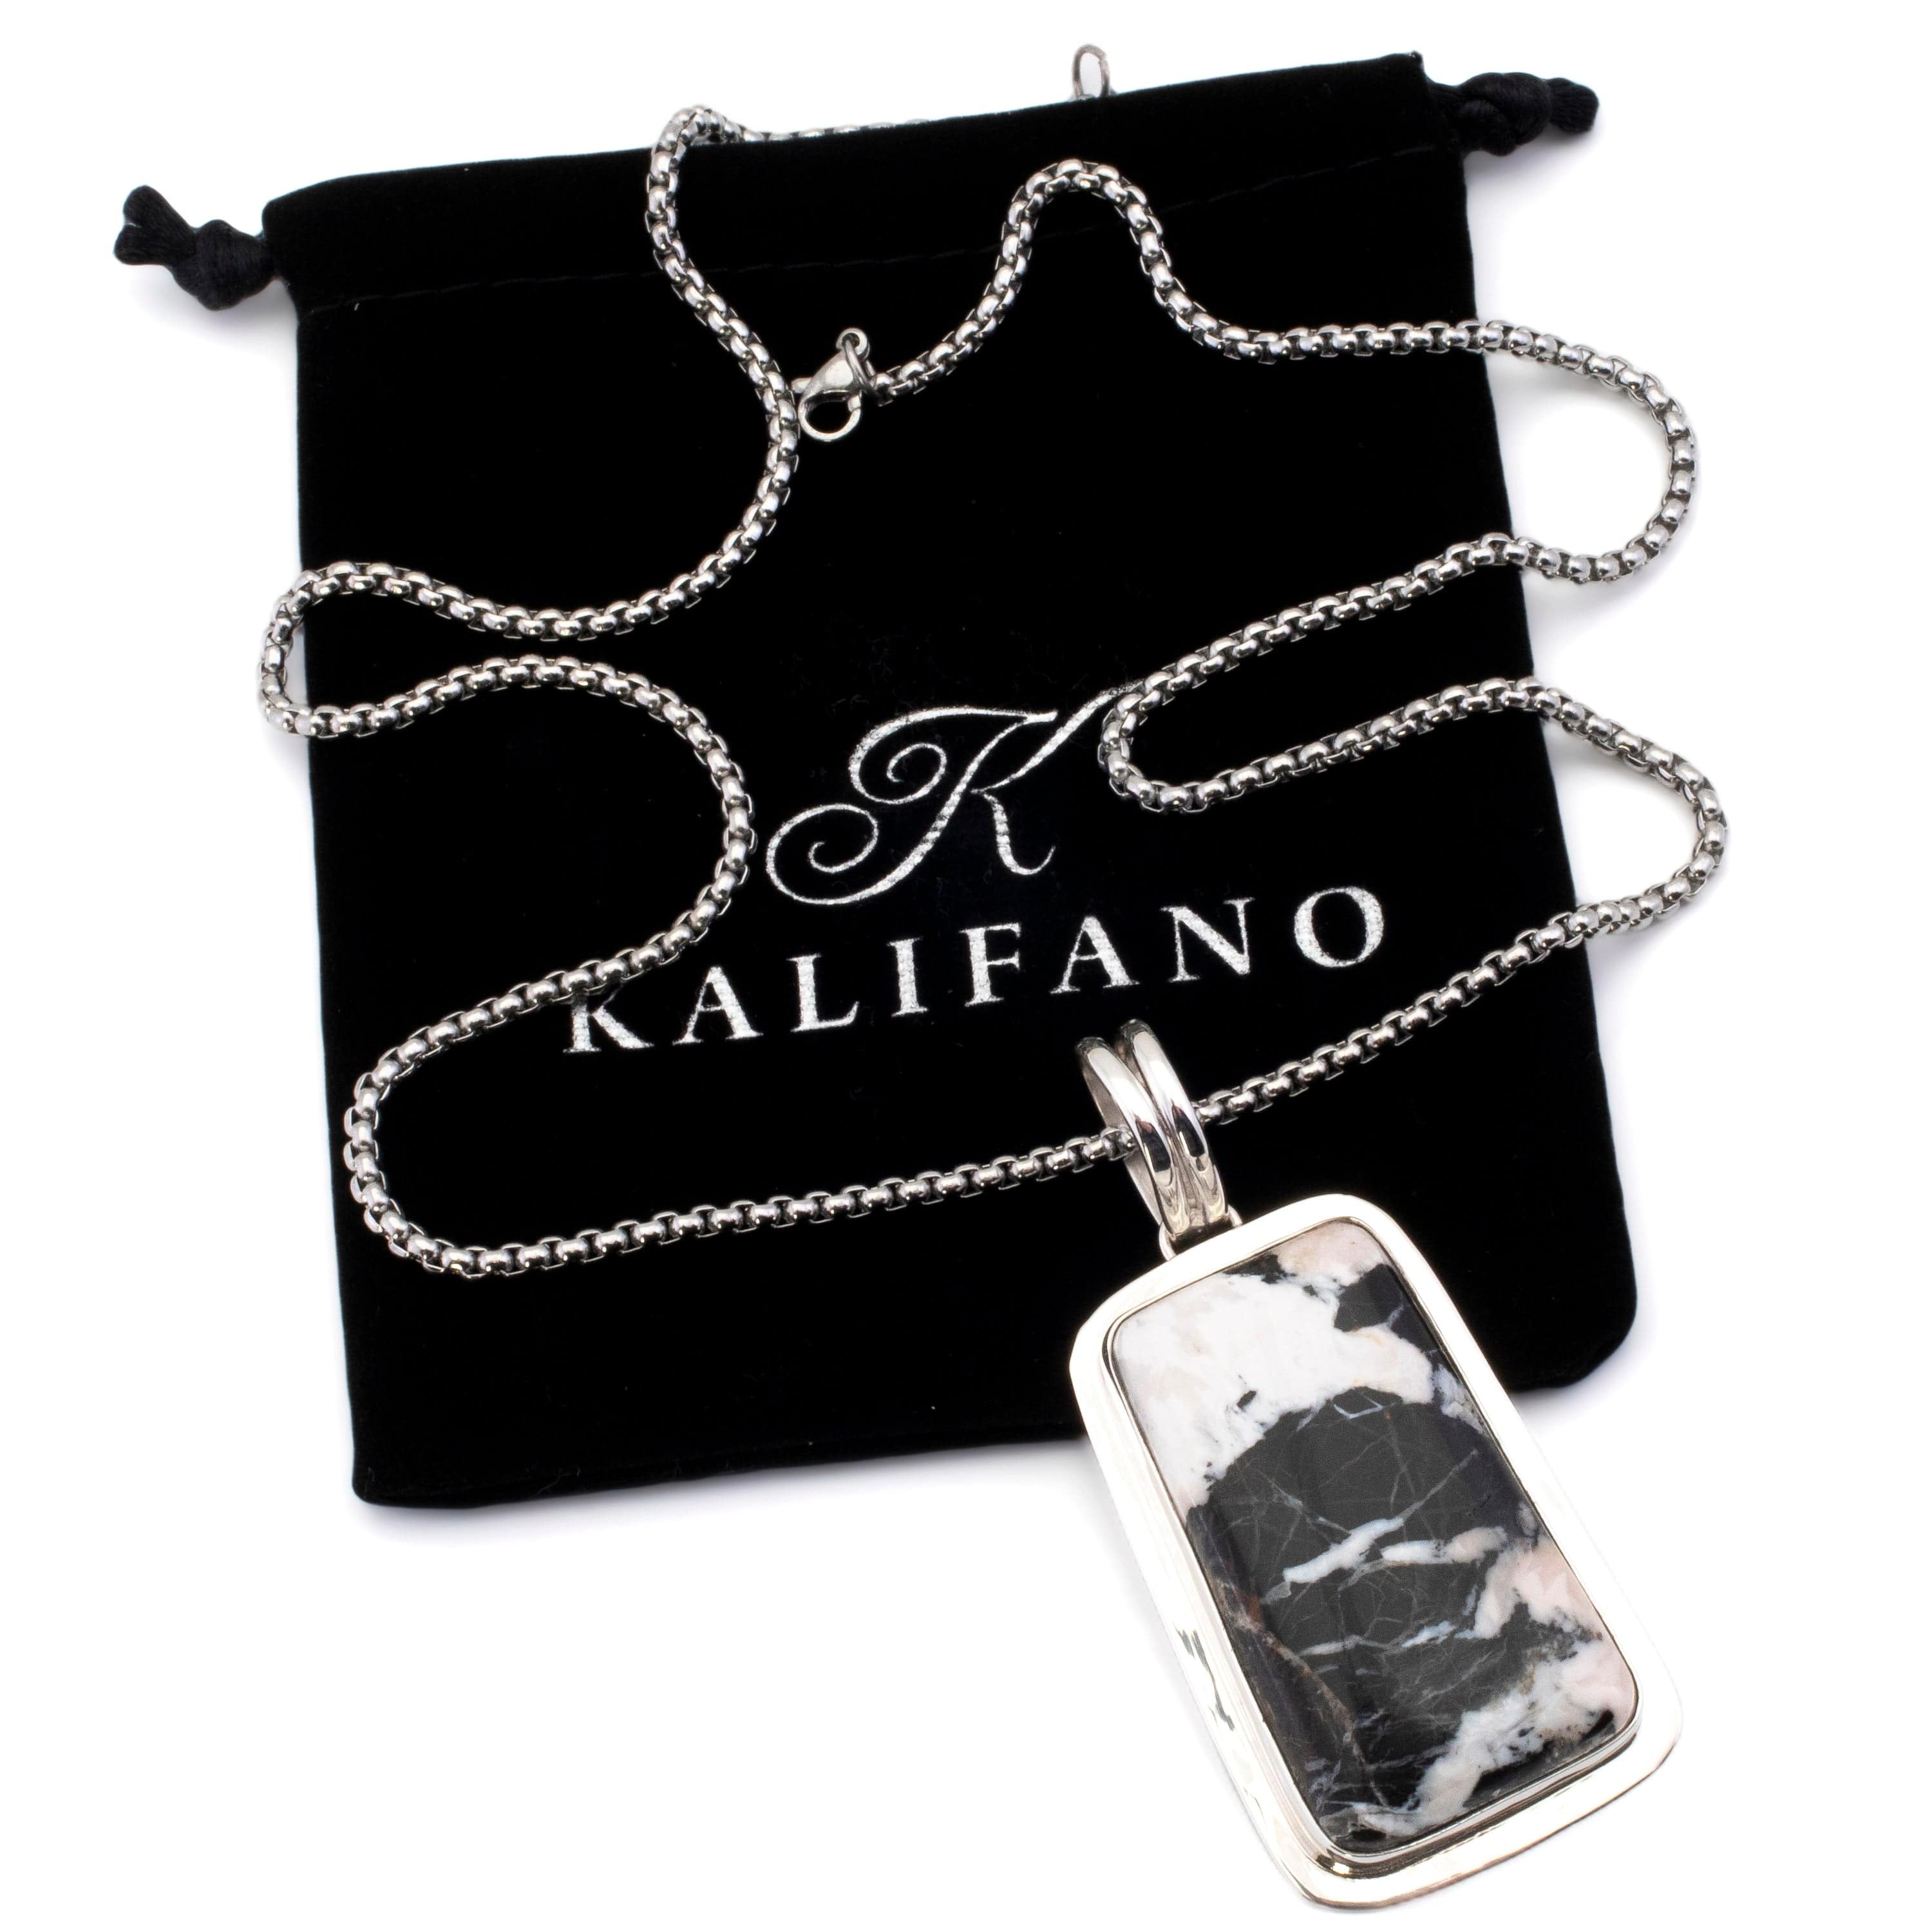 Kalifano Southwest Silver Jewelry White Buffalo Turquoise USA Handmade 925 Sterling Silver Pendant NMN1150.001